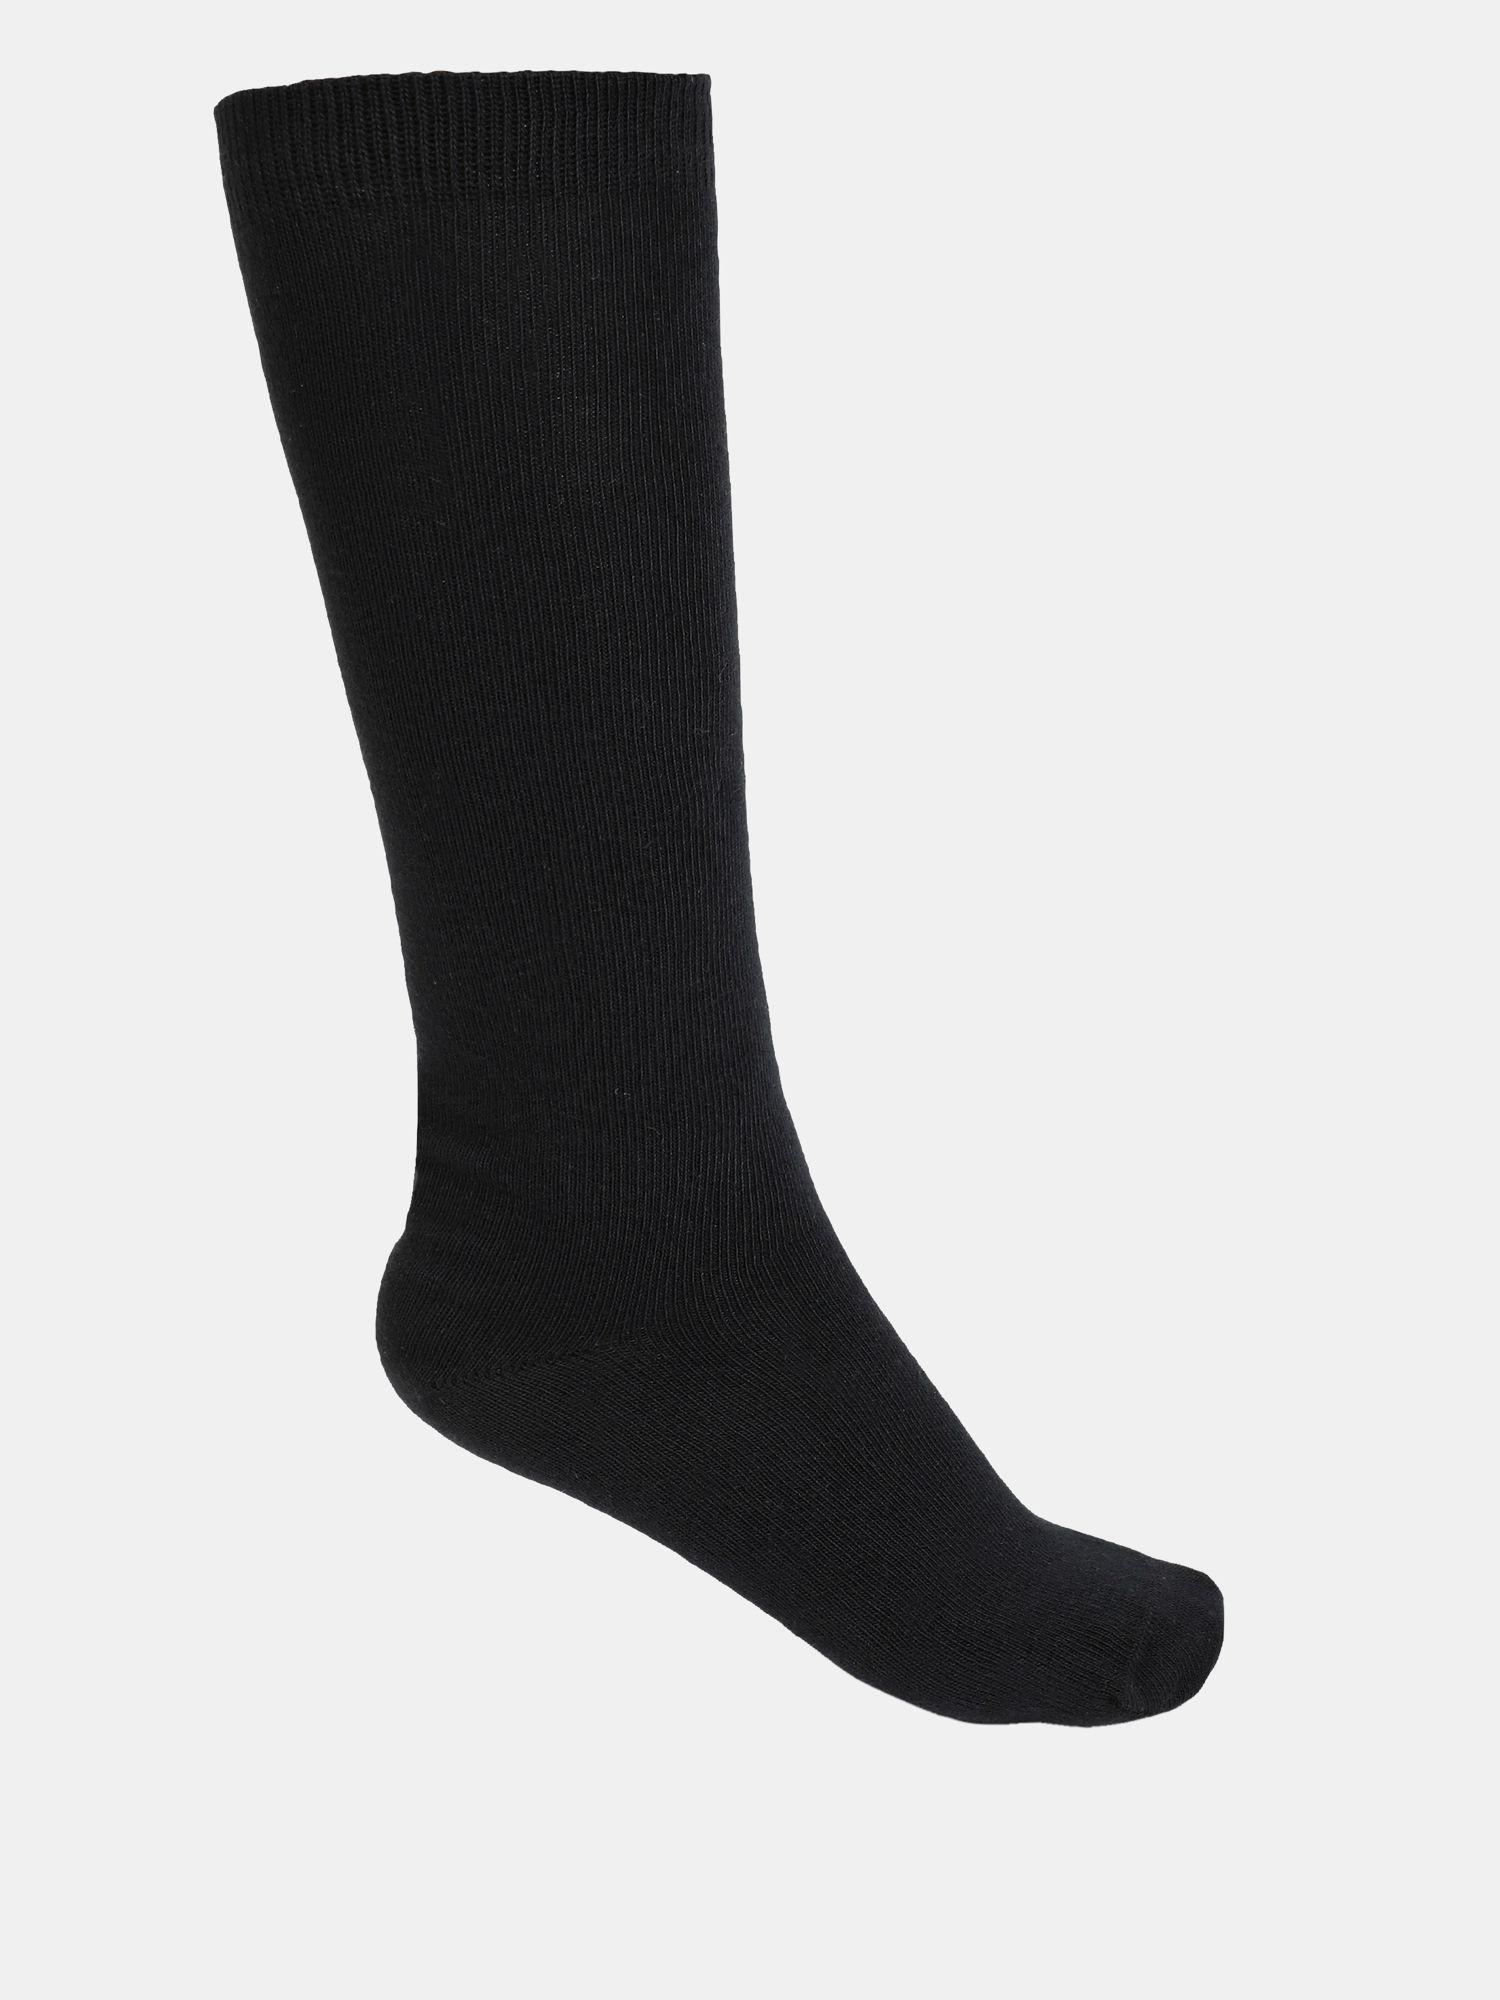 7902-unisex-cotton-nylon-stretch-knee-length-socks---black